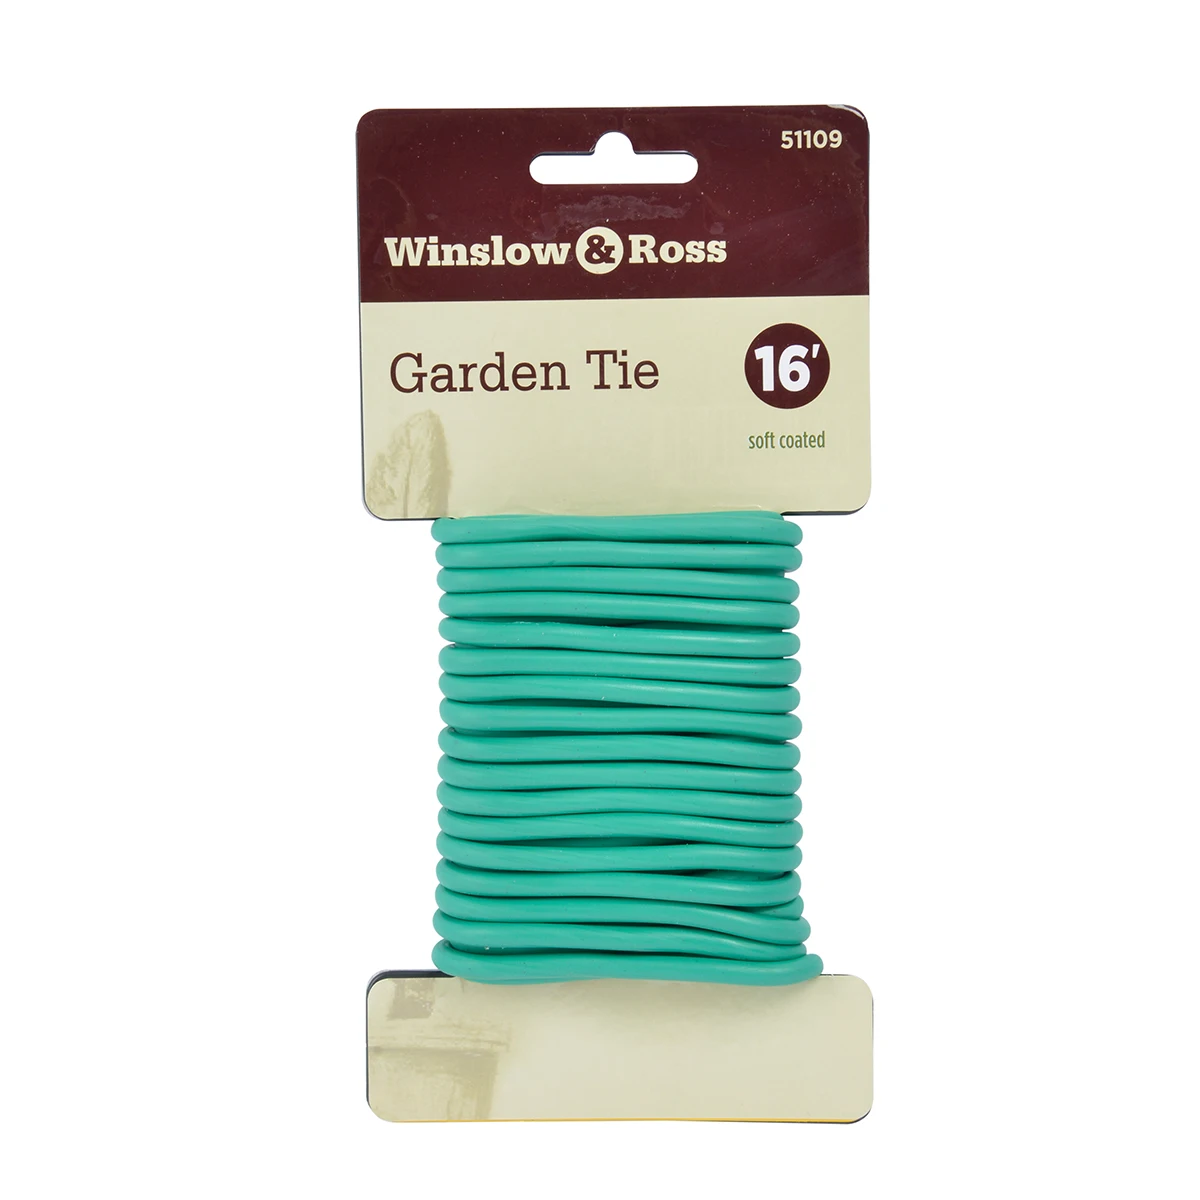 

Winslow & Ross 5m TPR covered galvanized steel tie Round Plastic Soft Garden Plant Twist Ties